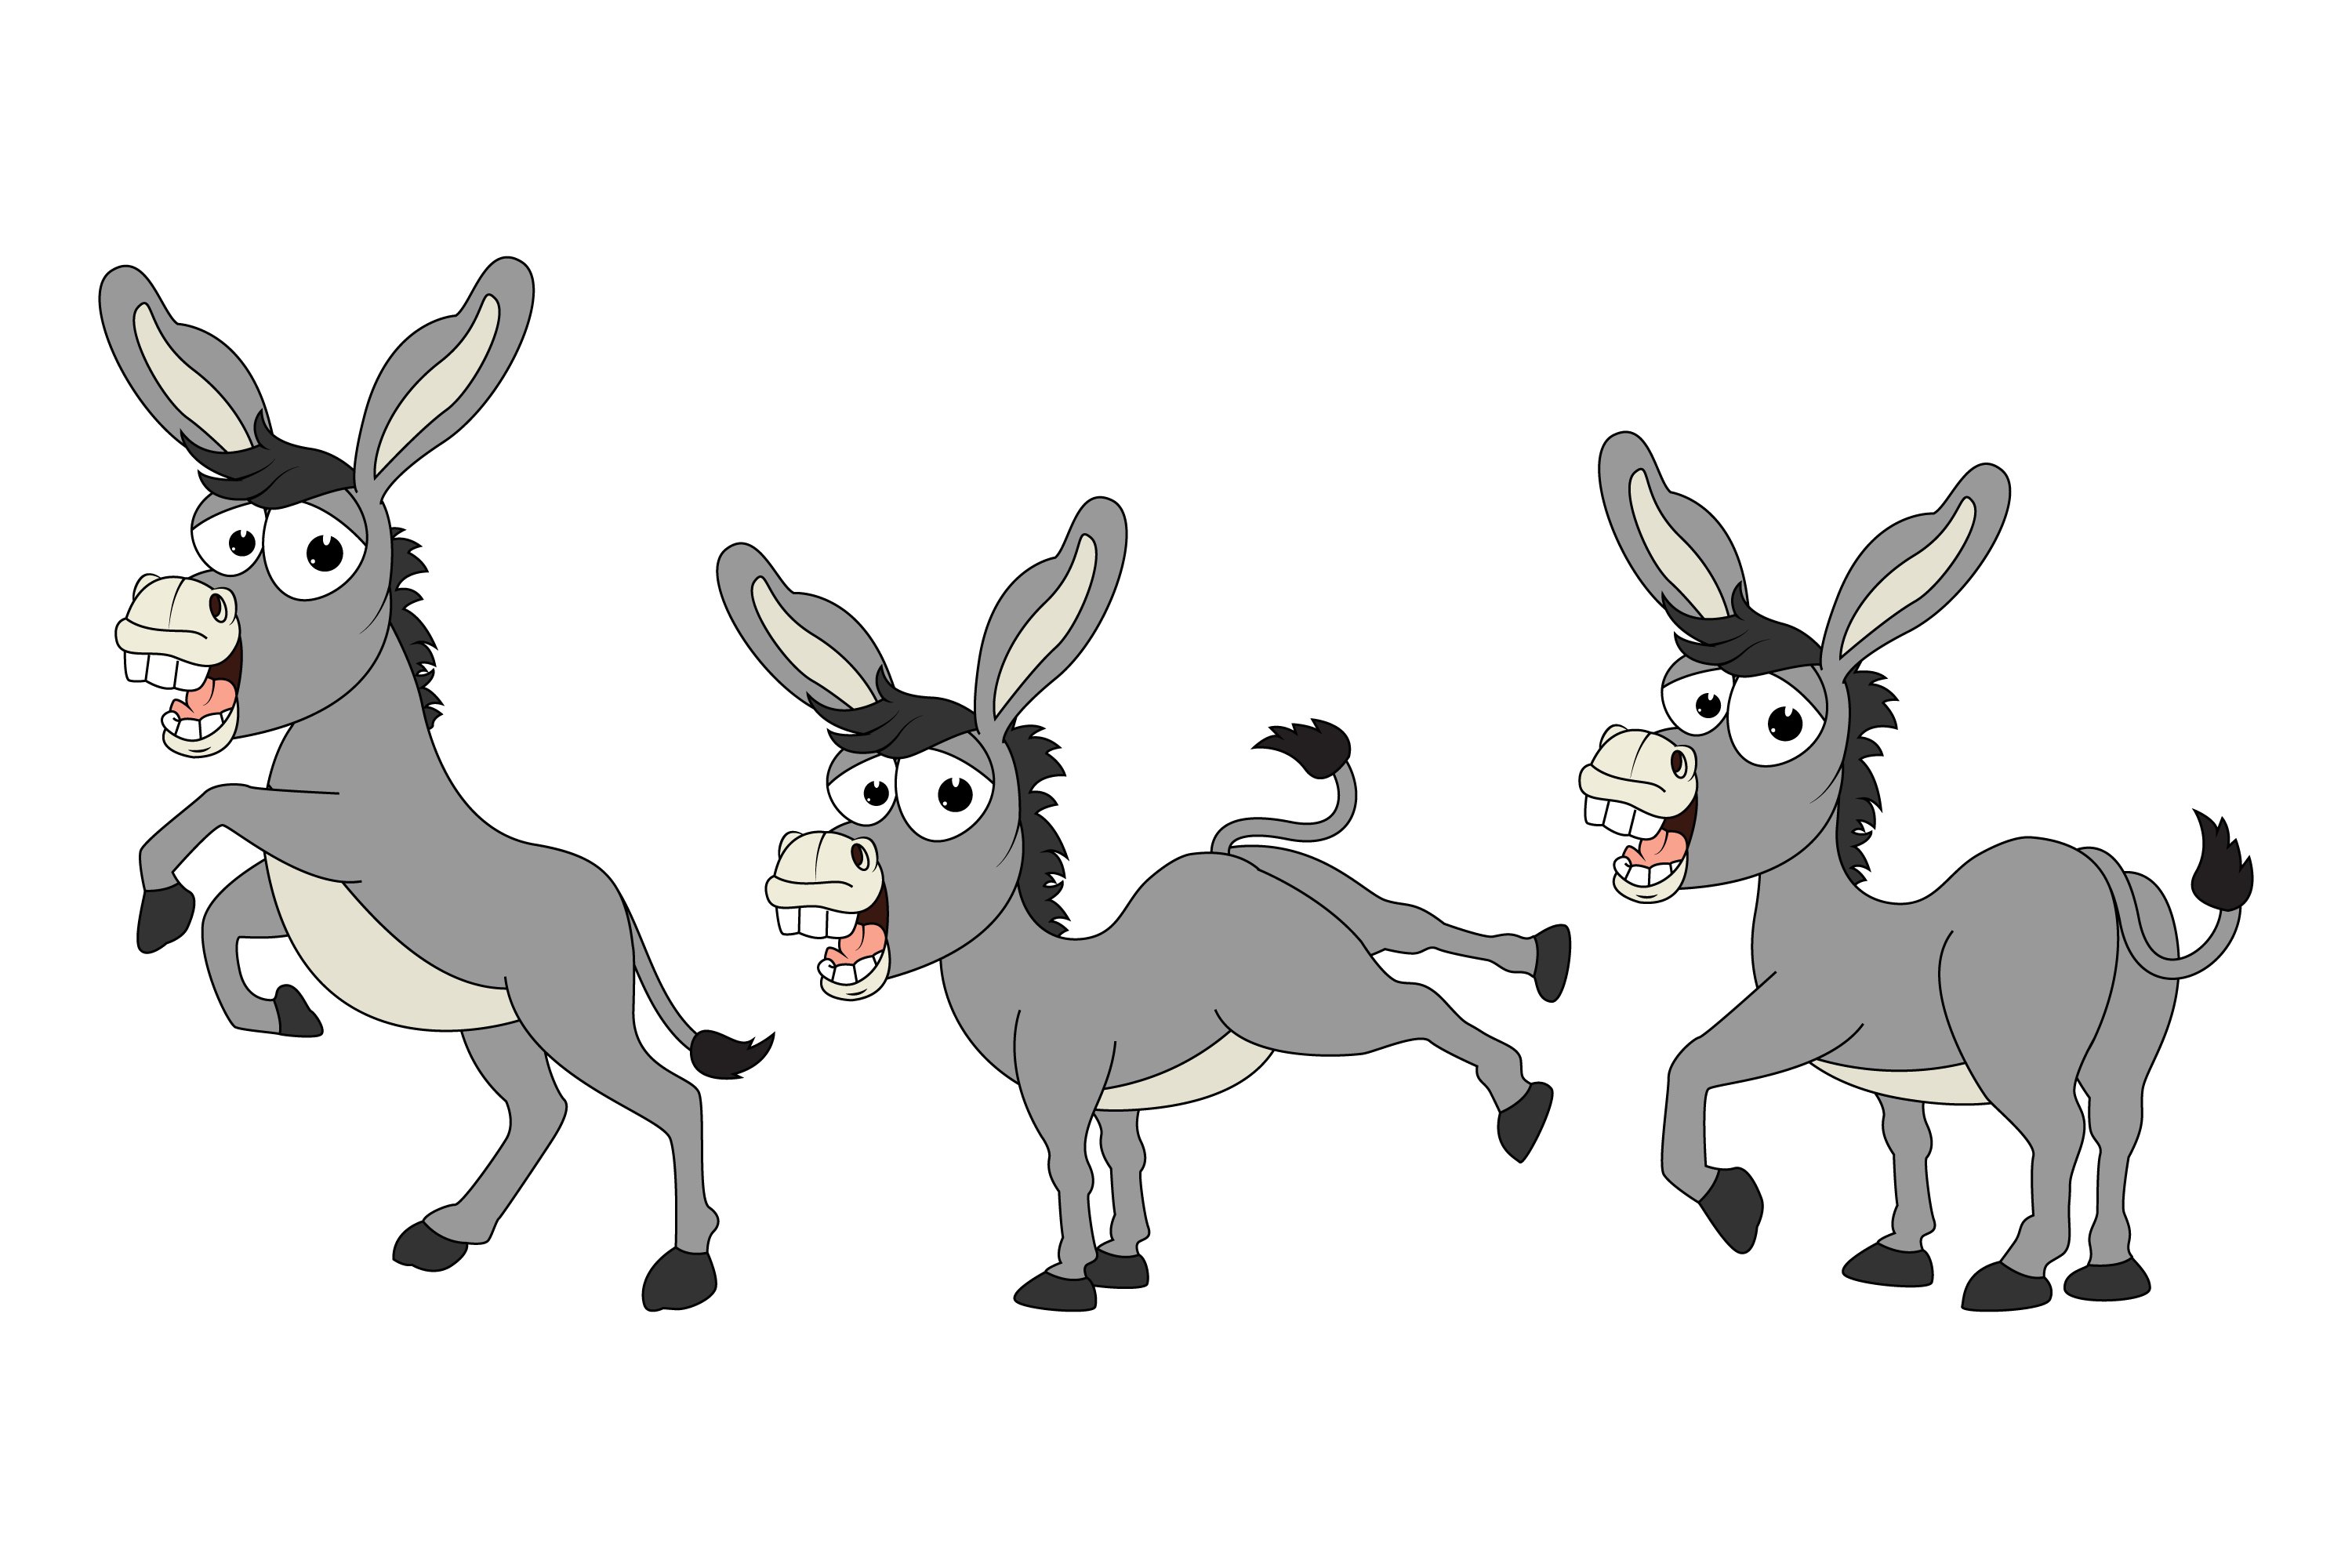 Funny donkey in the three mood types.